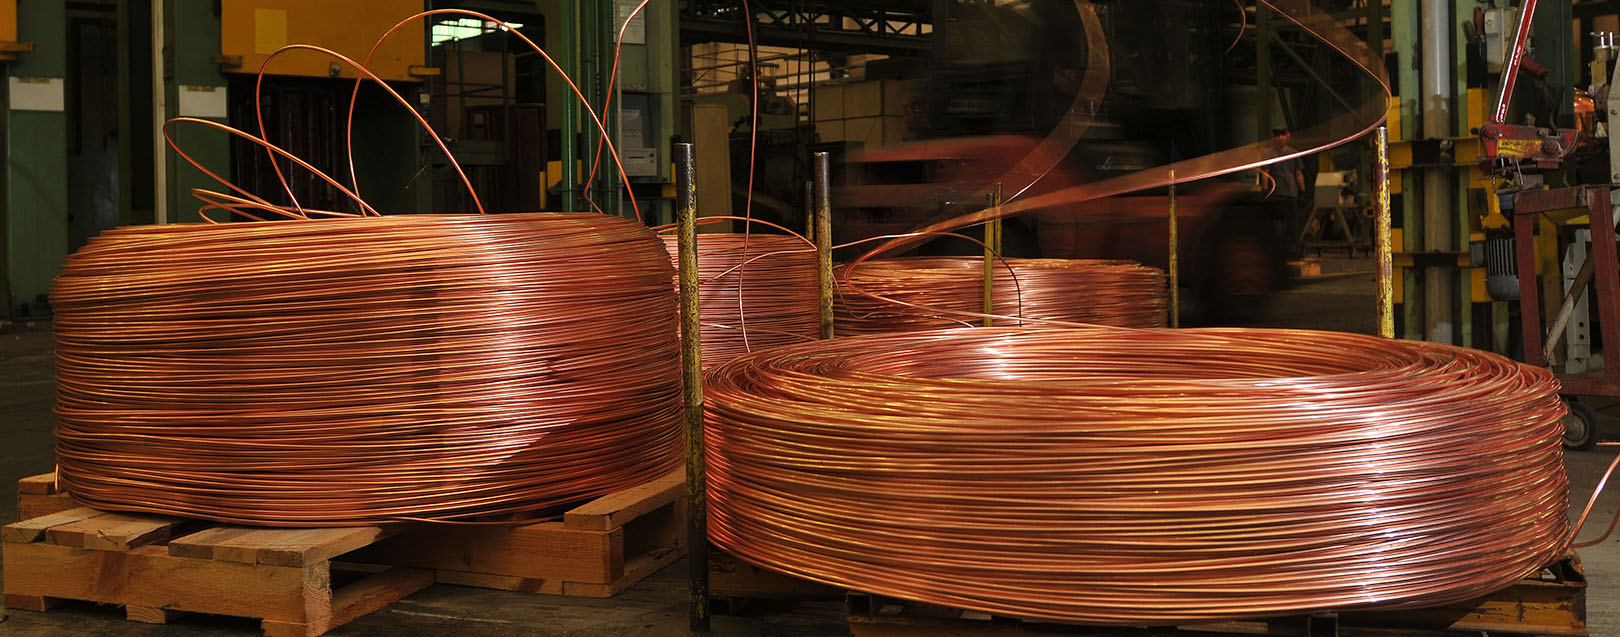 Hindustan Copper seeks Centre’s nod for copper plant